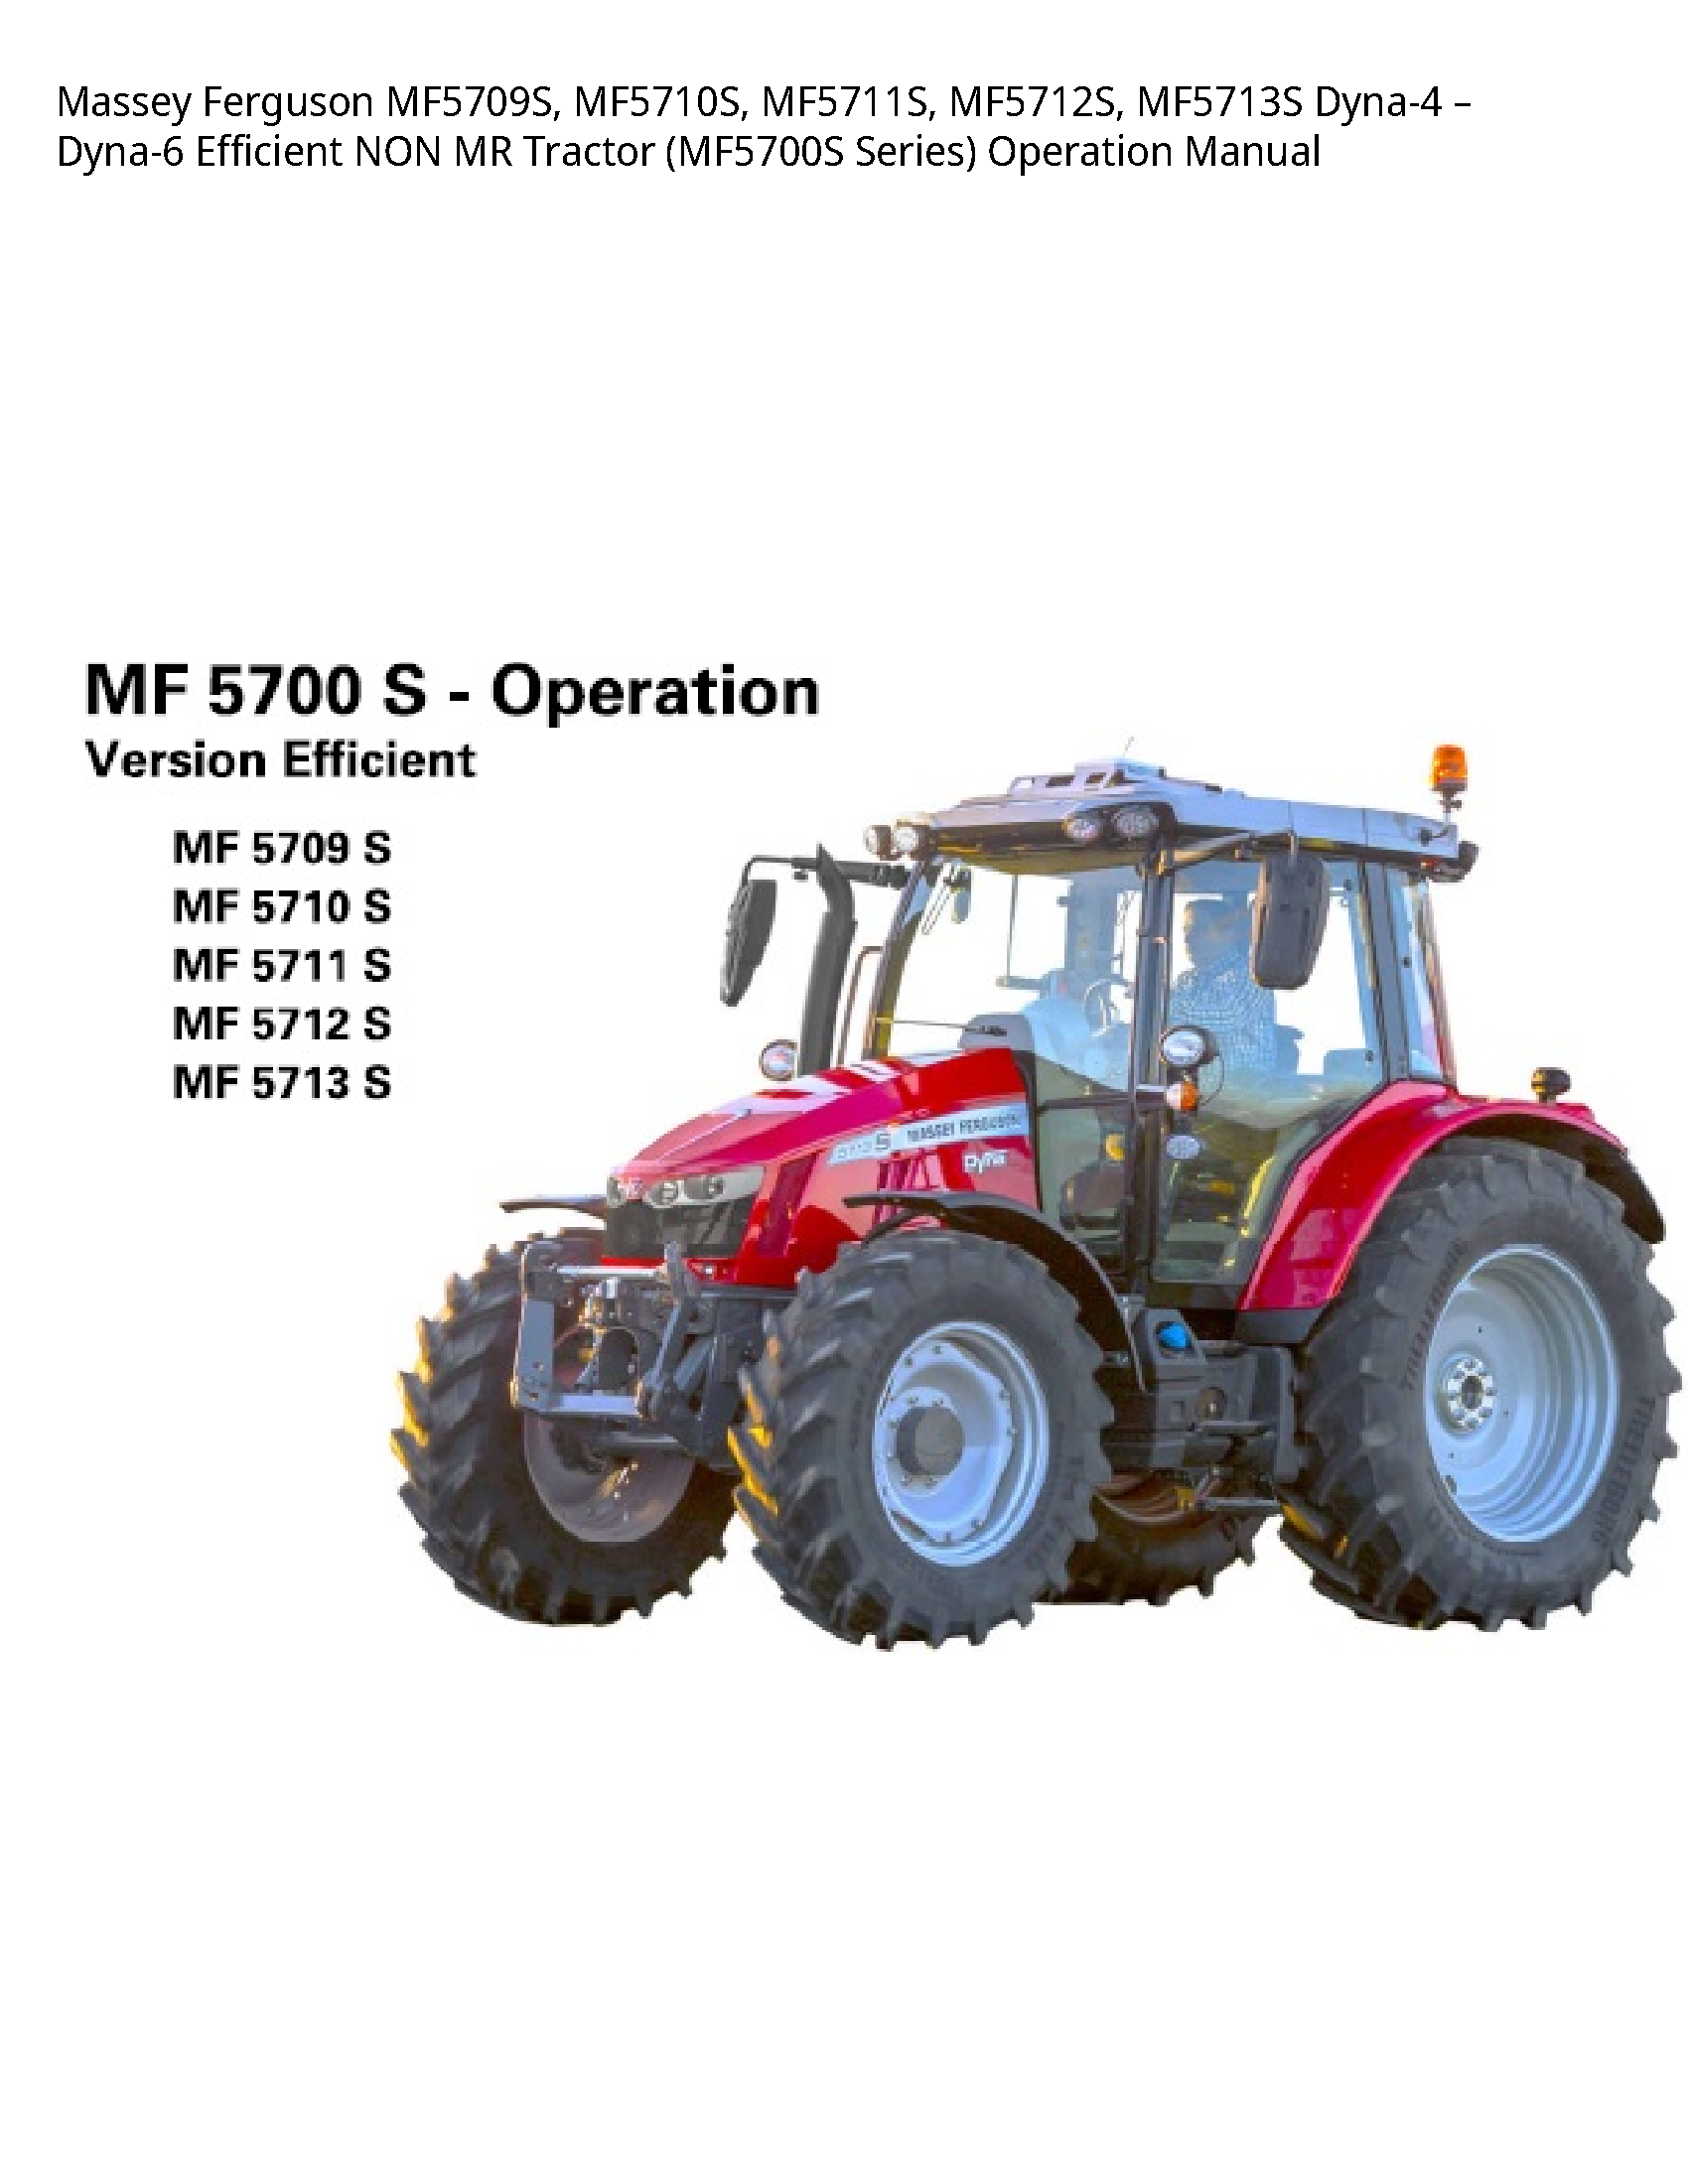 Massey Ferguson MF5709S Efficient NON MR Tractor Series) Operation manual